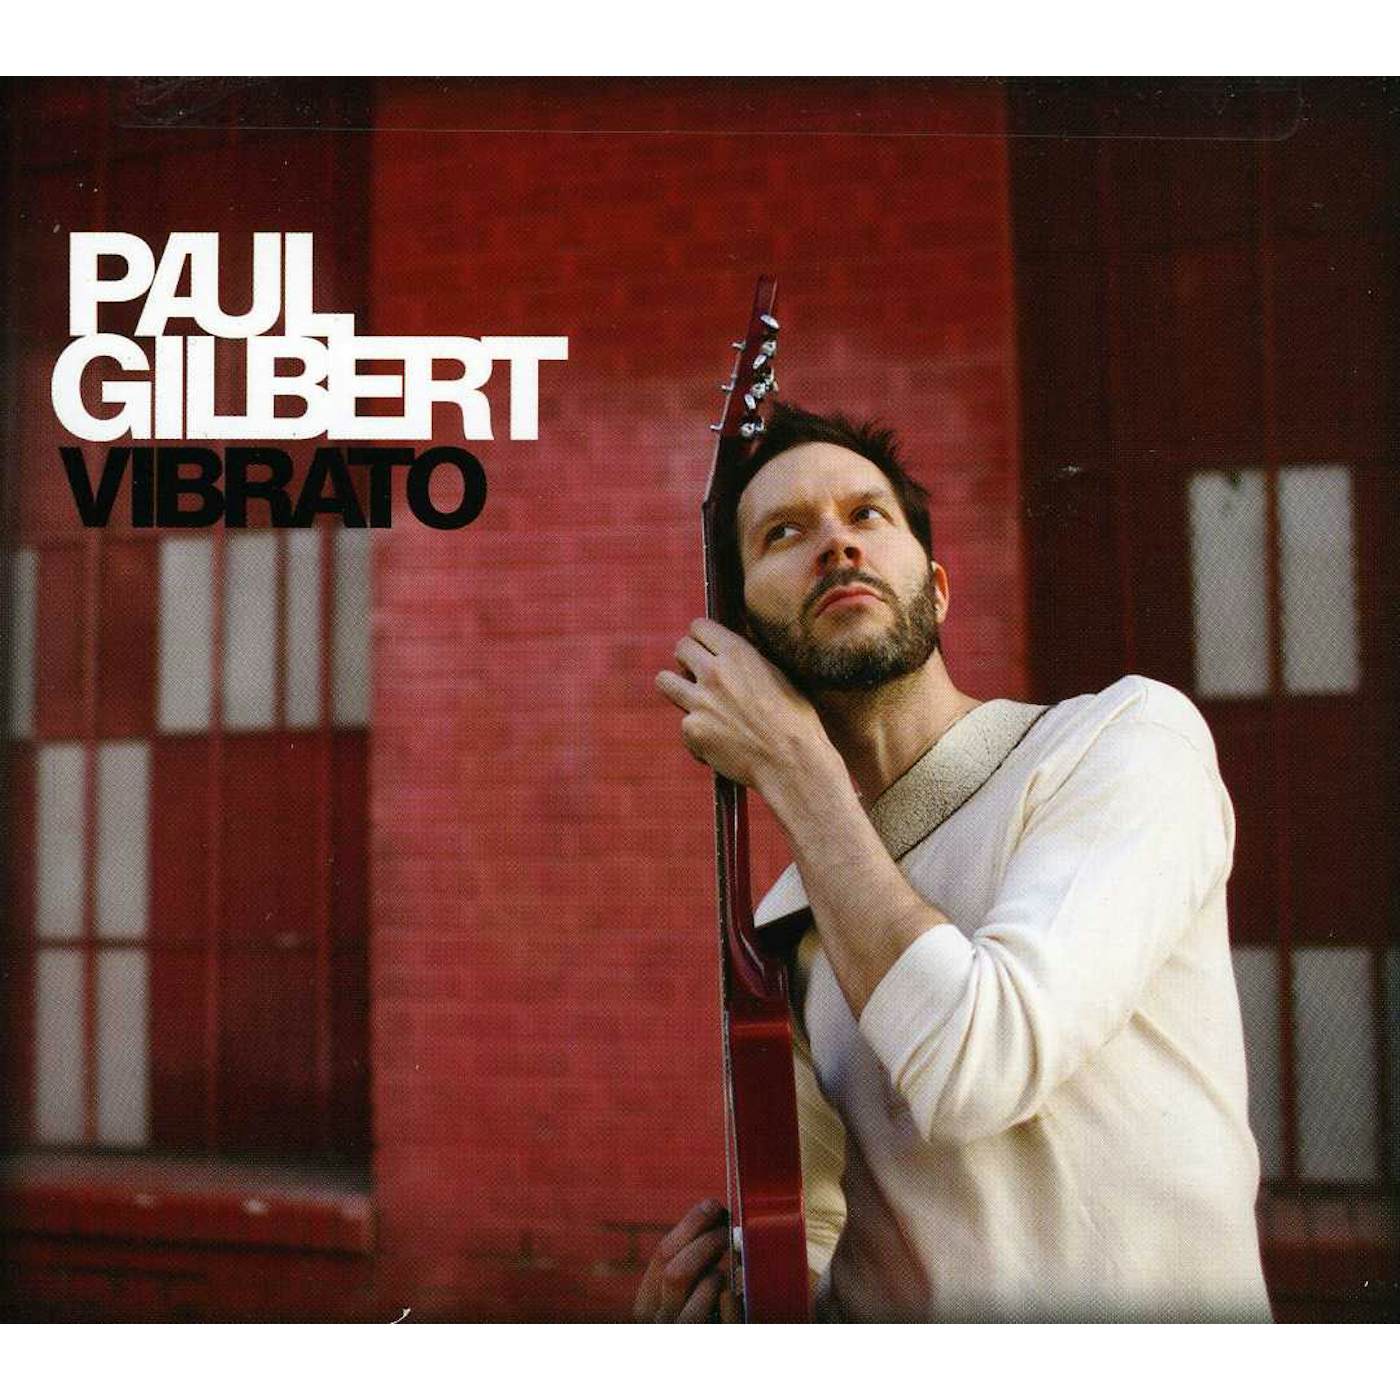 Paul Gilbert VIBRATO CD